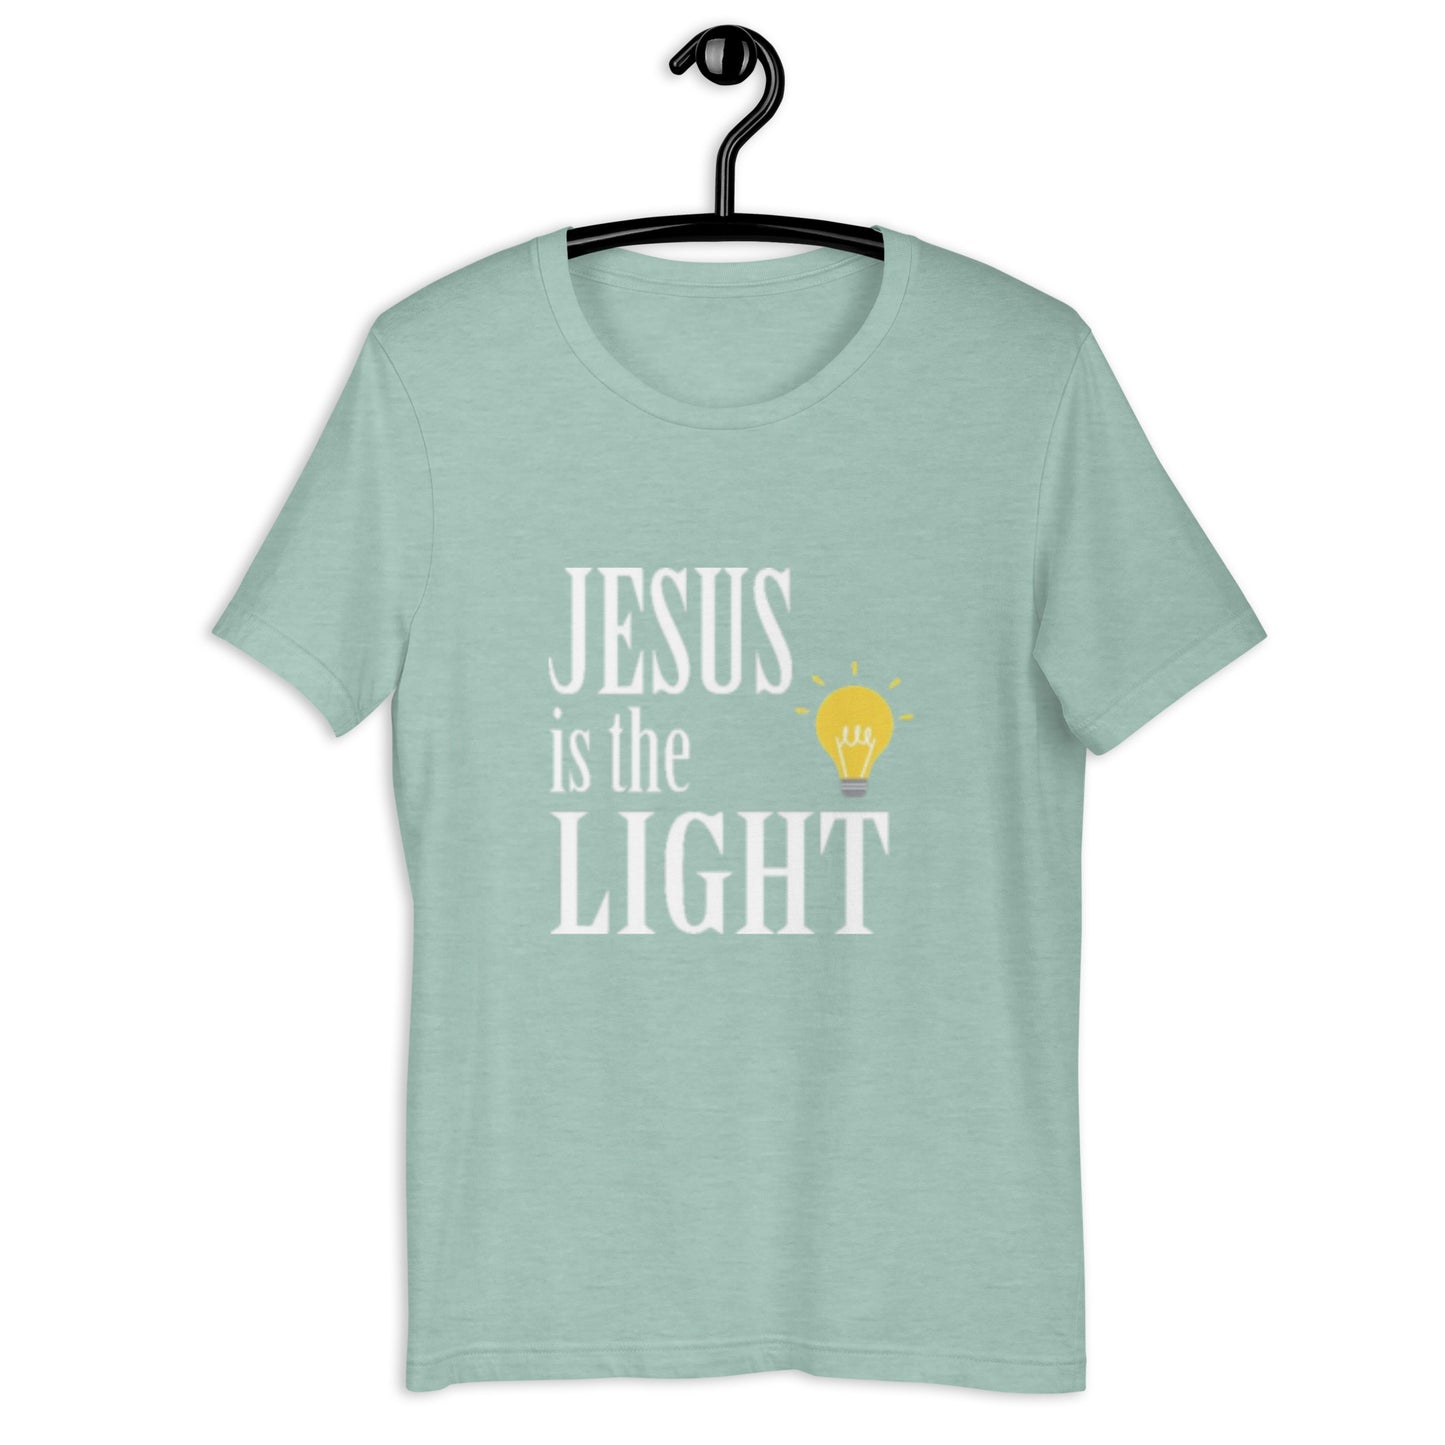 Jesus is the light T shirt